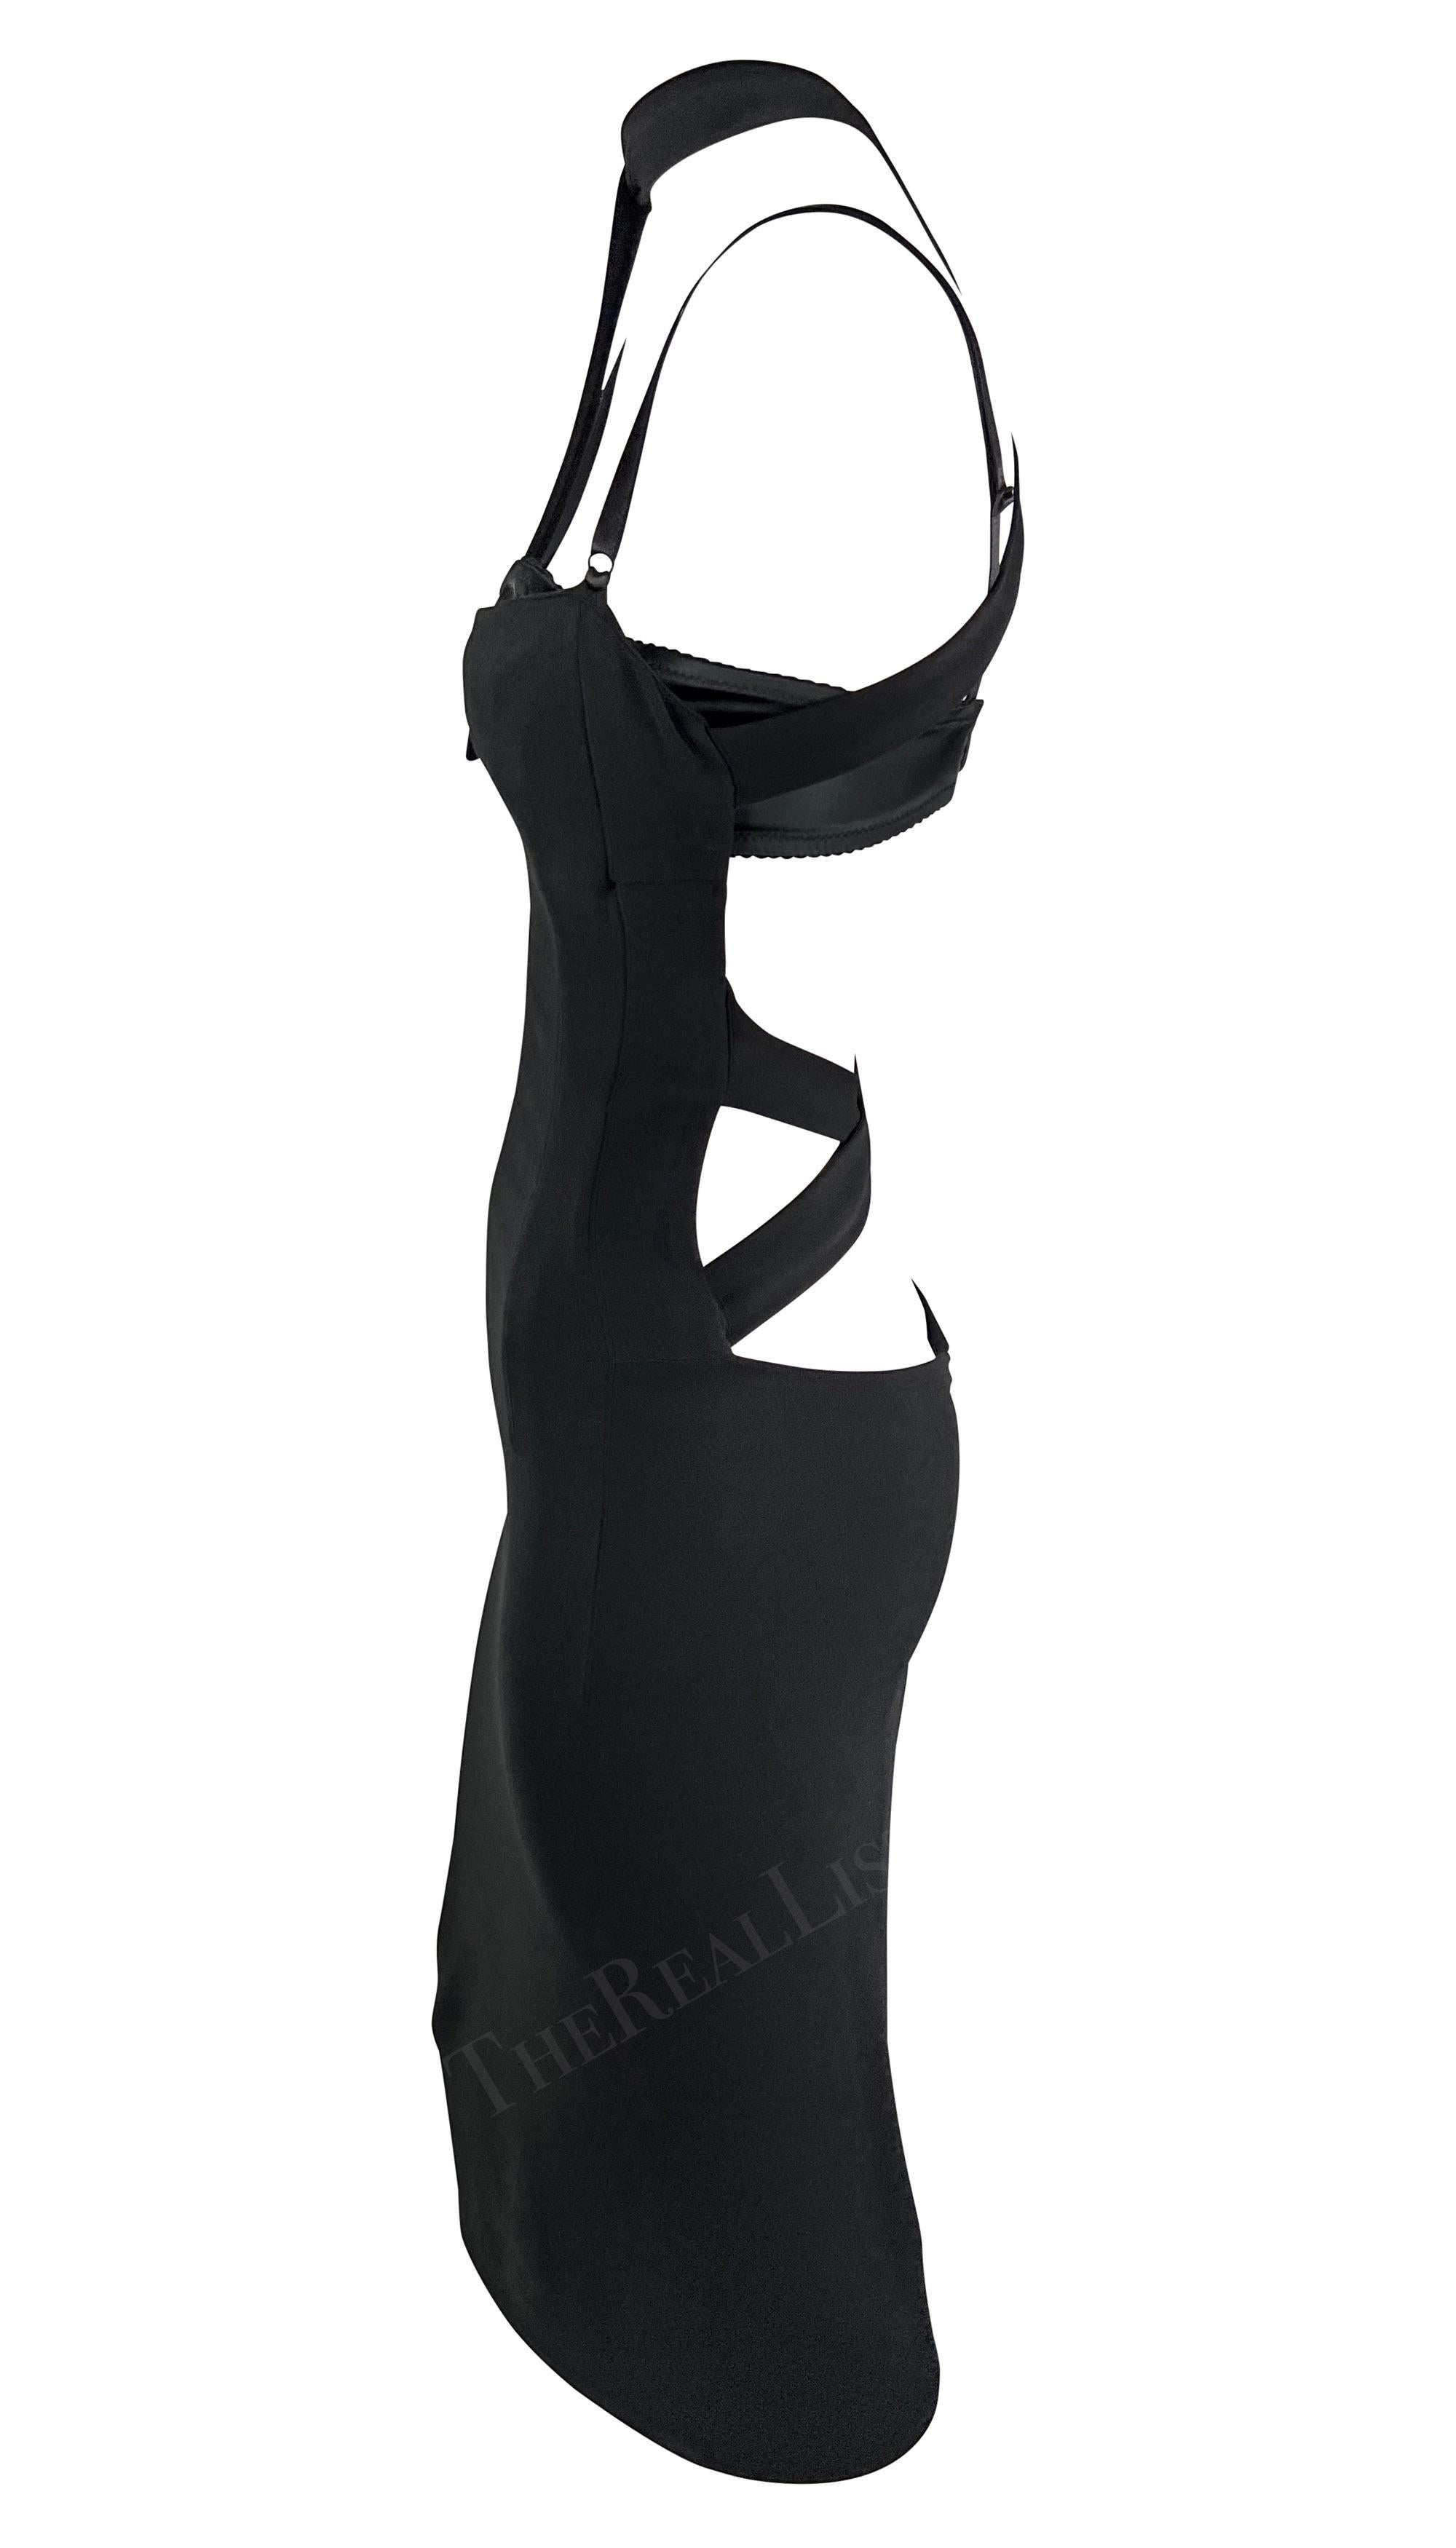 S/S 2001 Dolce & Gabbana Black Bodycon Strap Backless Runway Dress For Sale 7